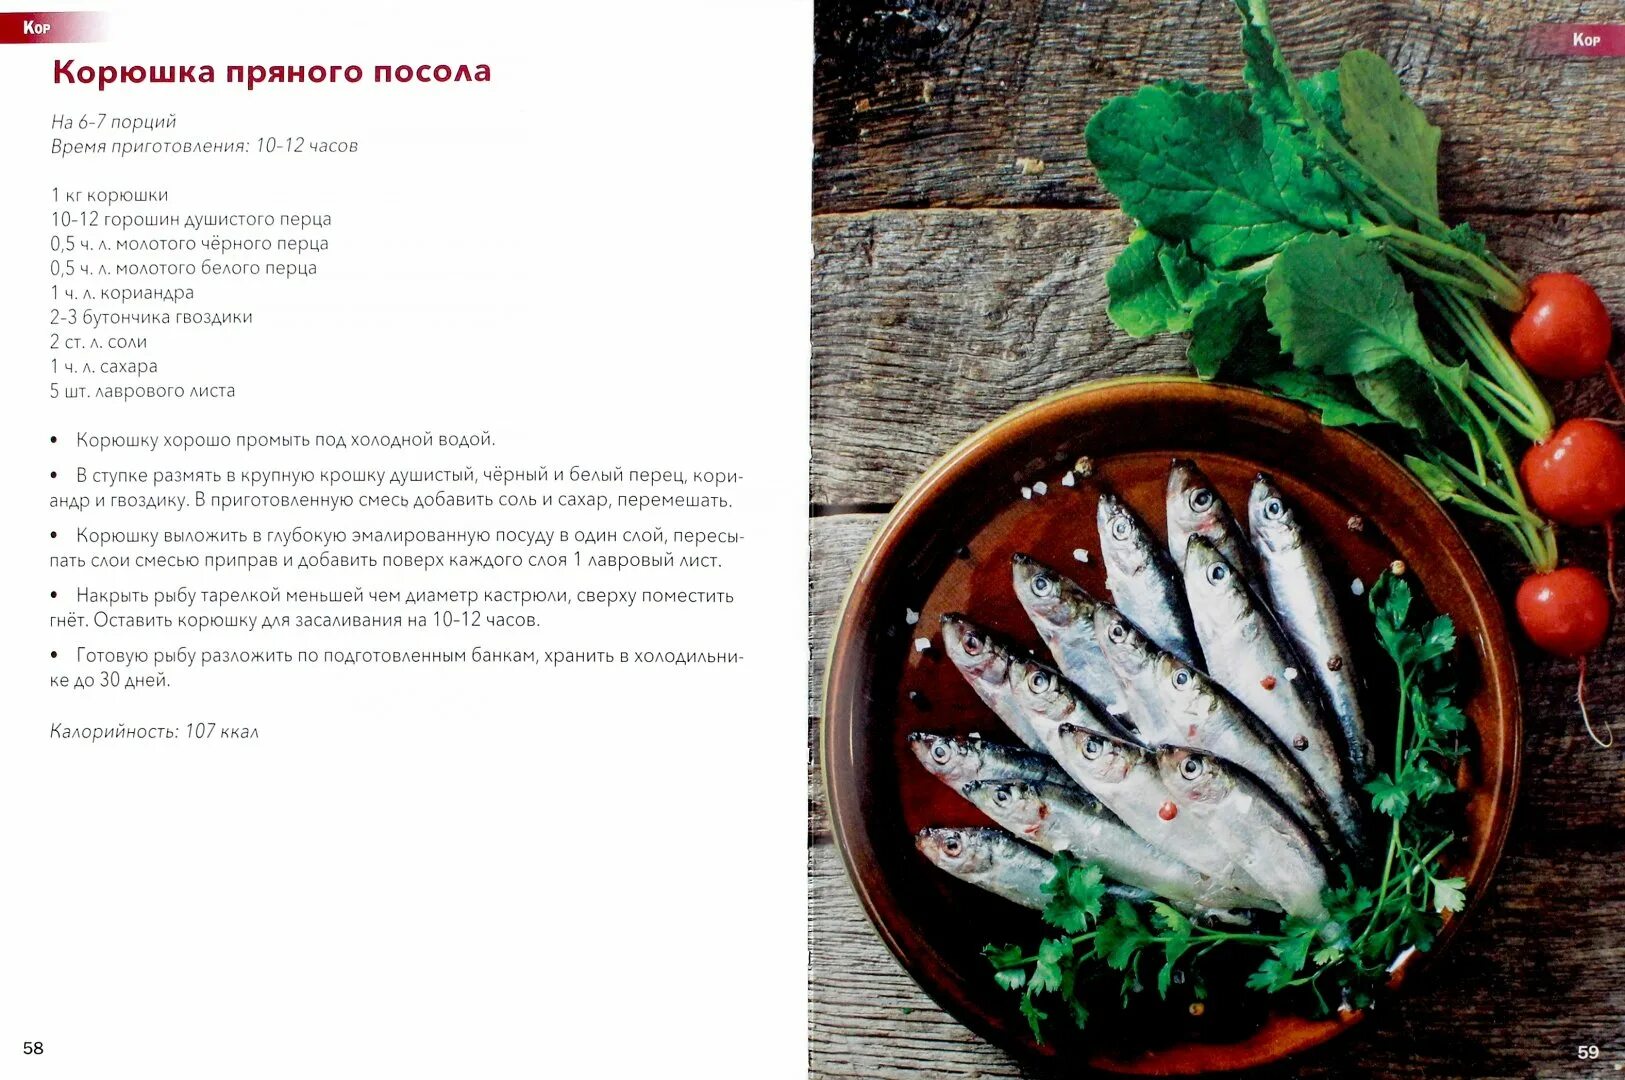 1 5 14 том том. Чебак пряного посола калории. Рецепт смеси пряного посола рыбы.